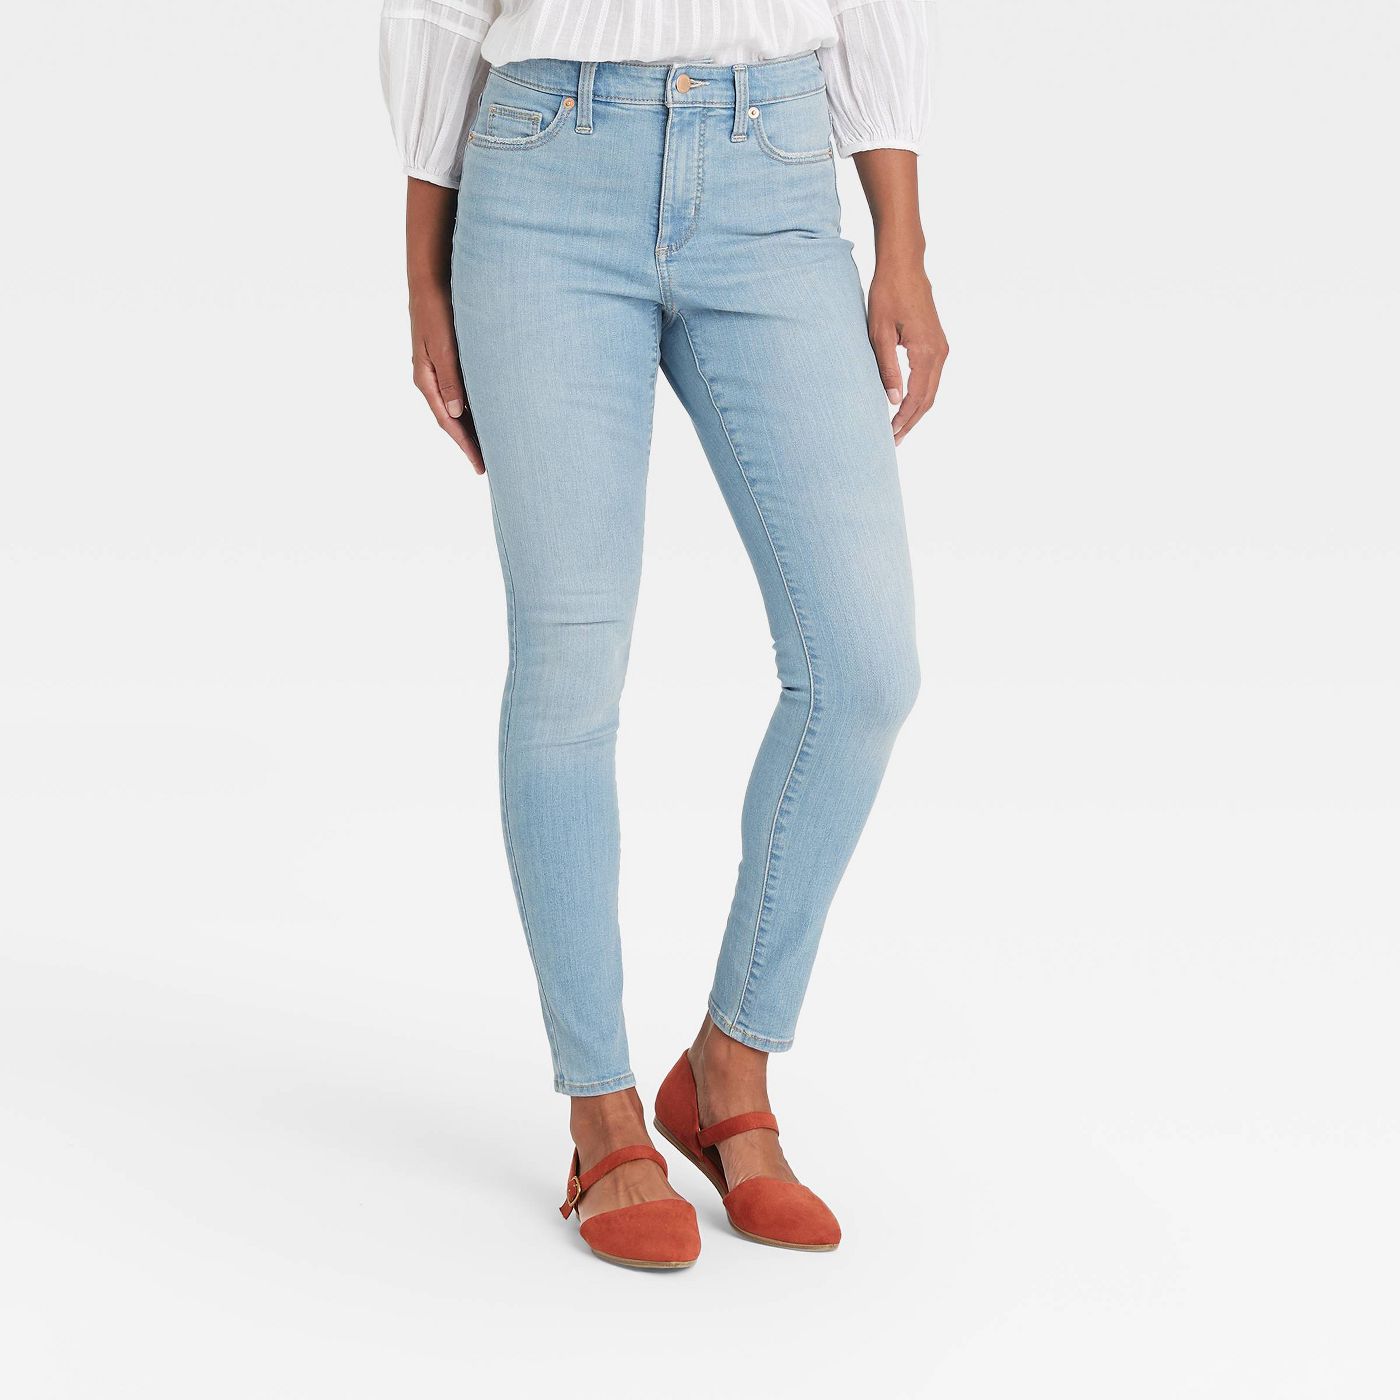 Women's High-Rise Skinny Jeans - Universal Threadâ„¢ - image 1 of 11